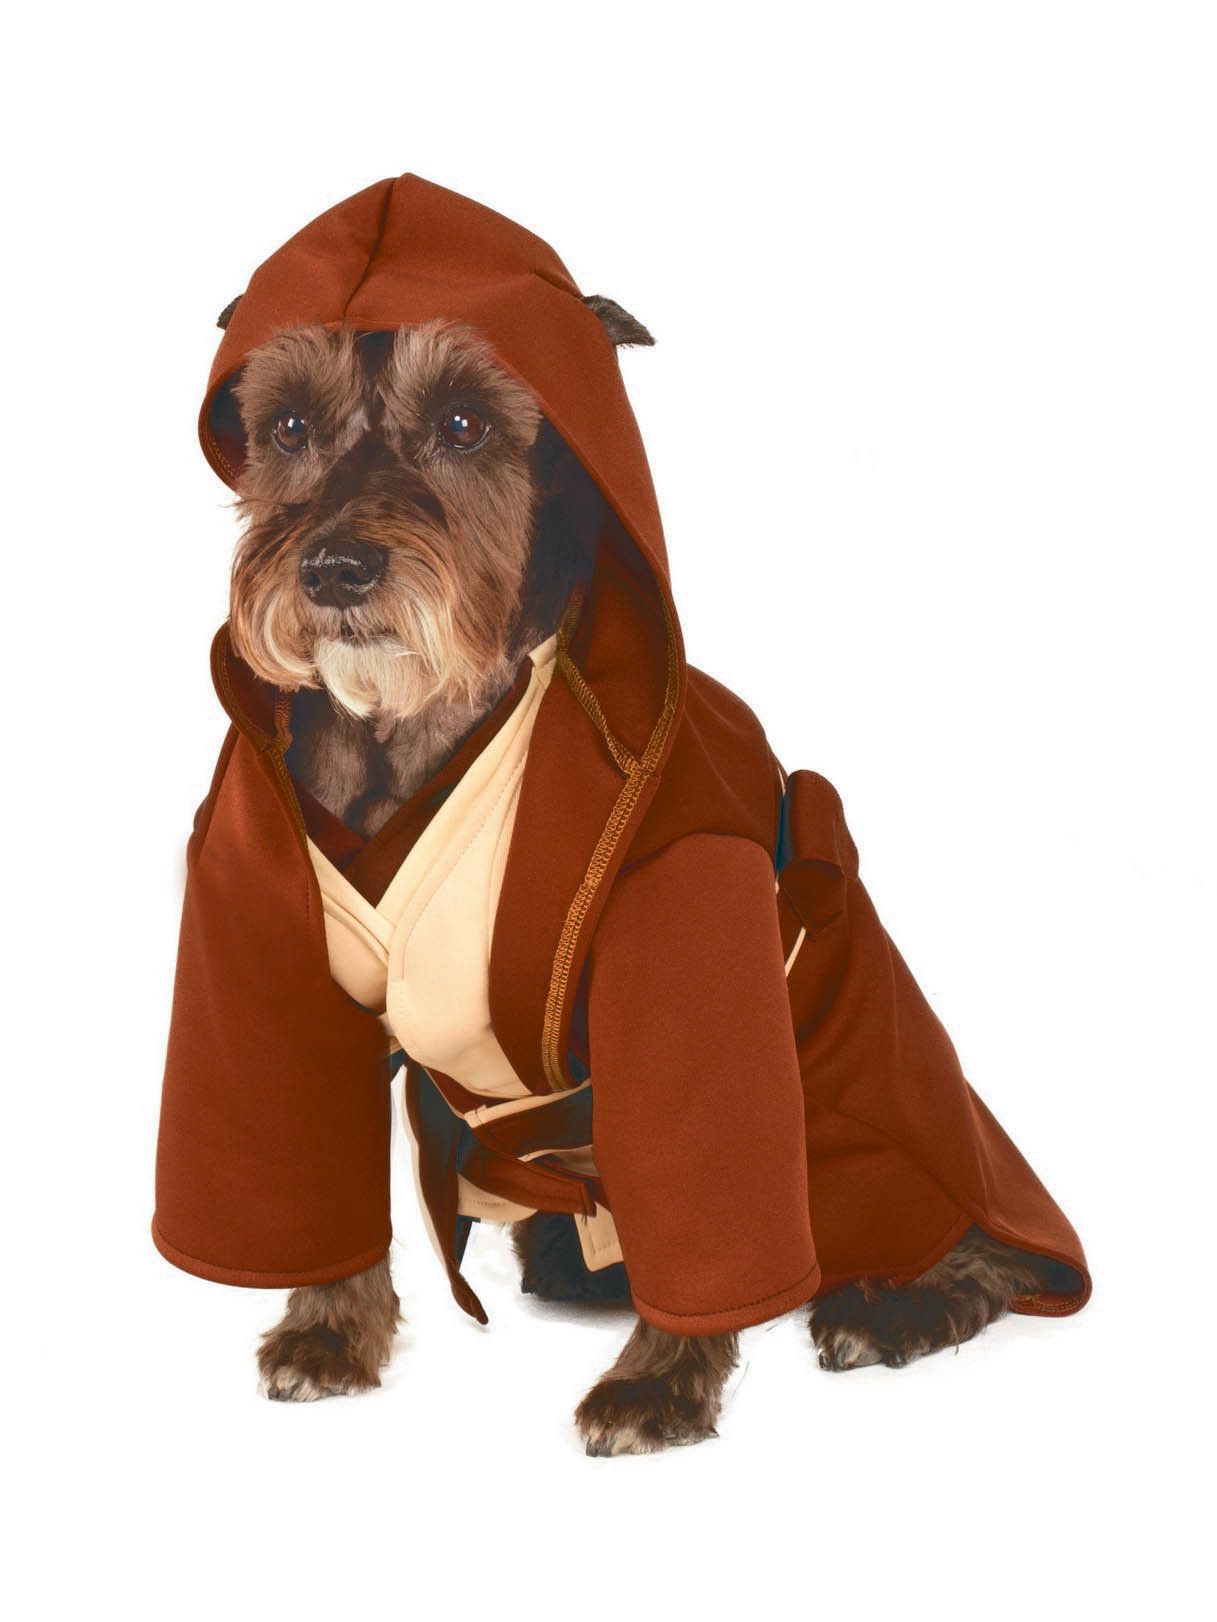 Star Wars Jedi Robe Pet Costume - costumes.com